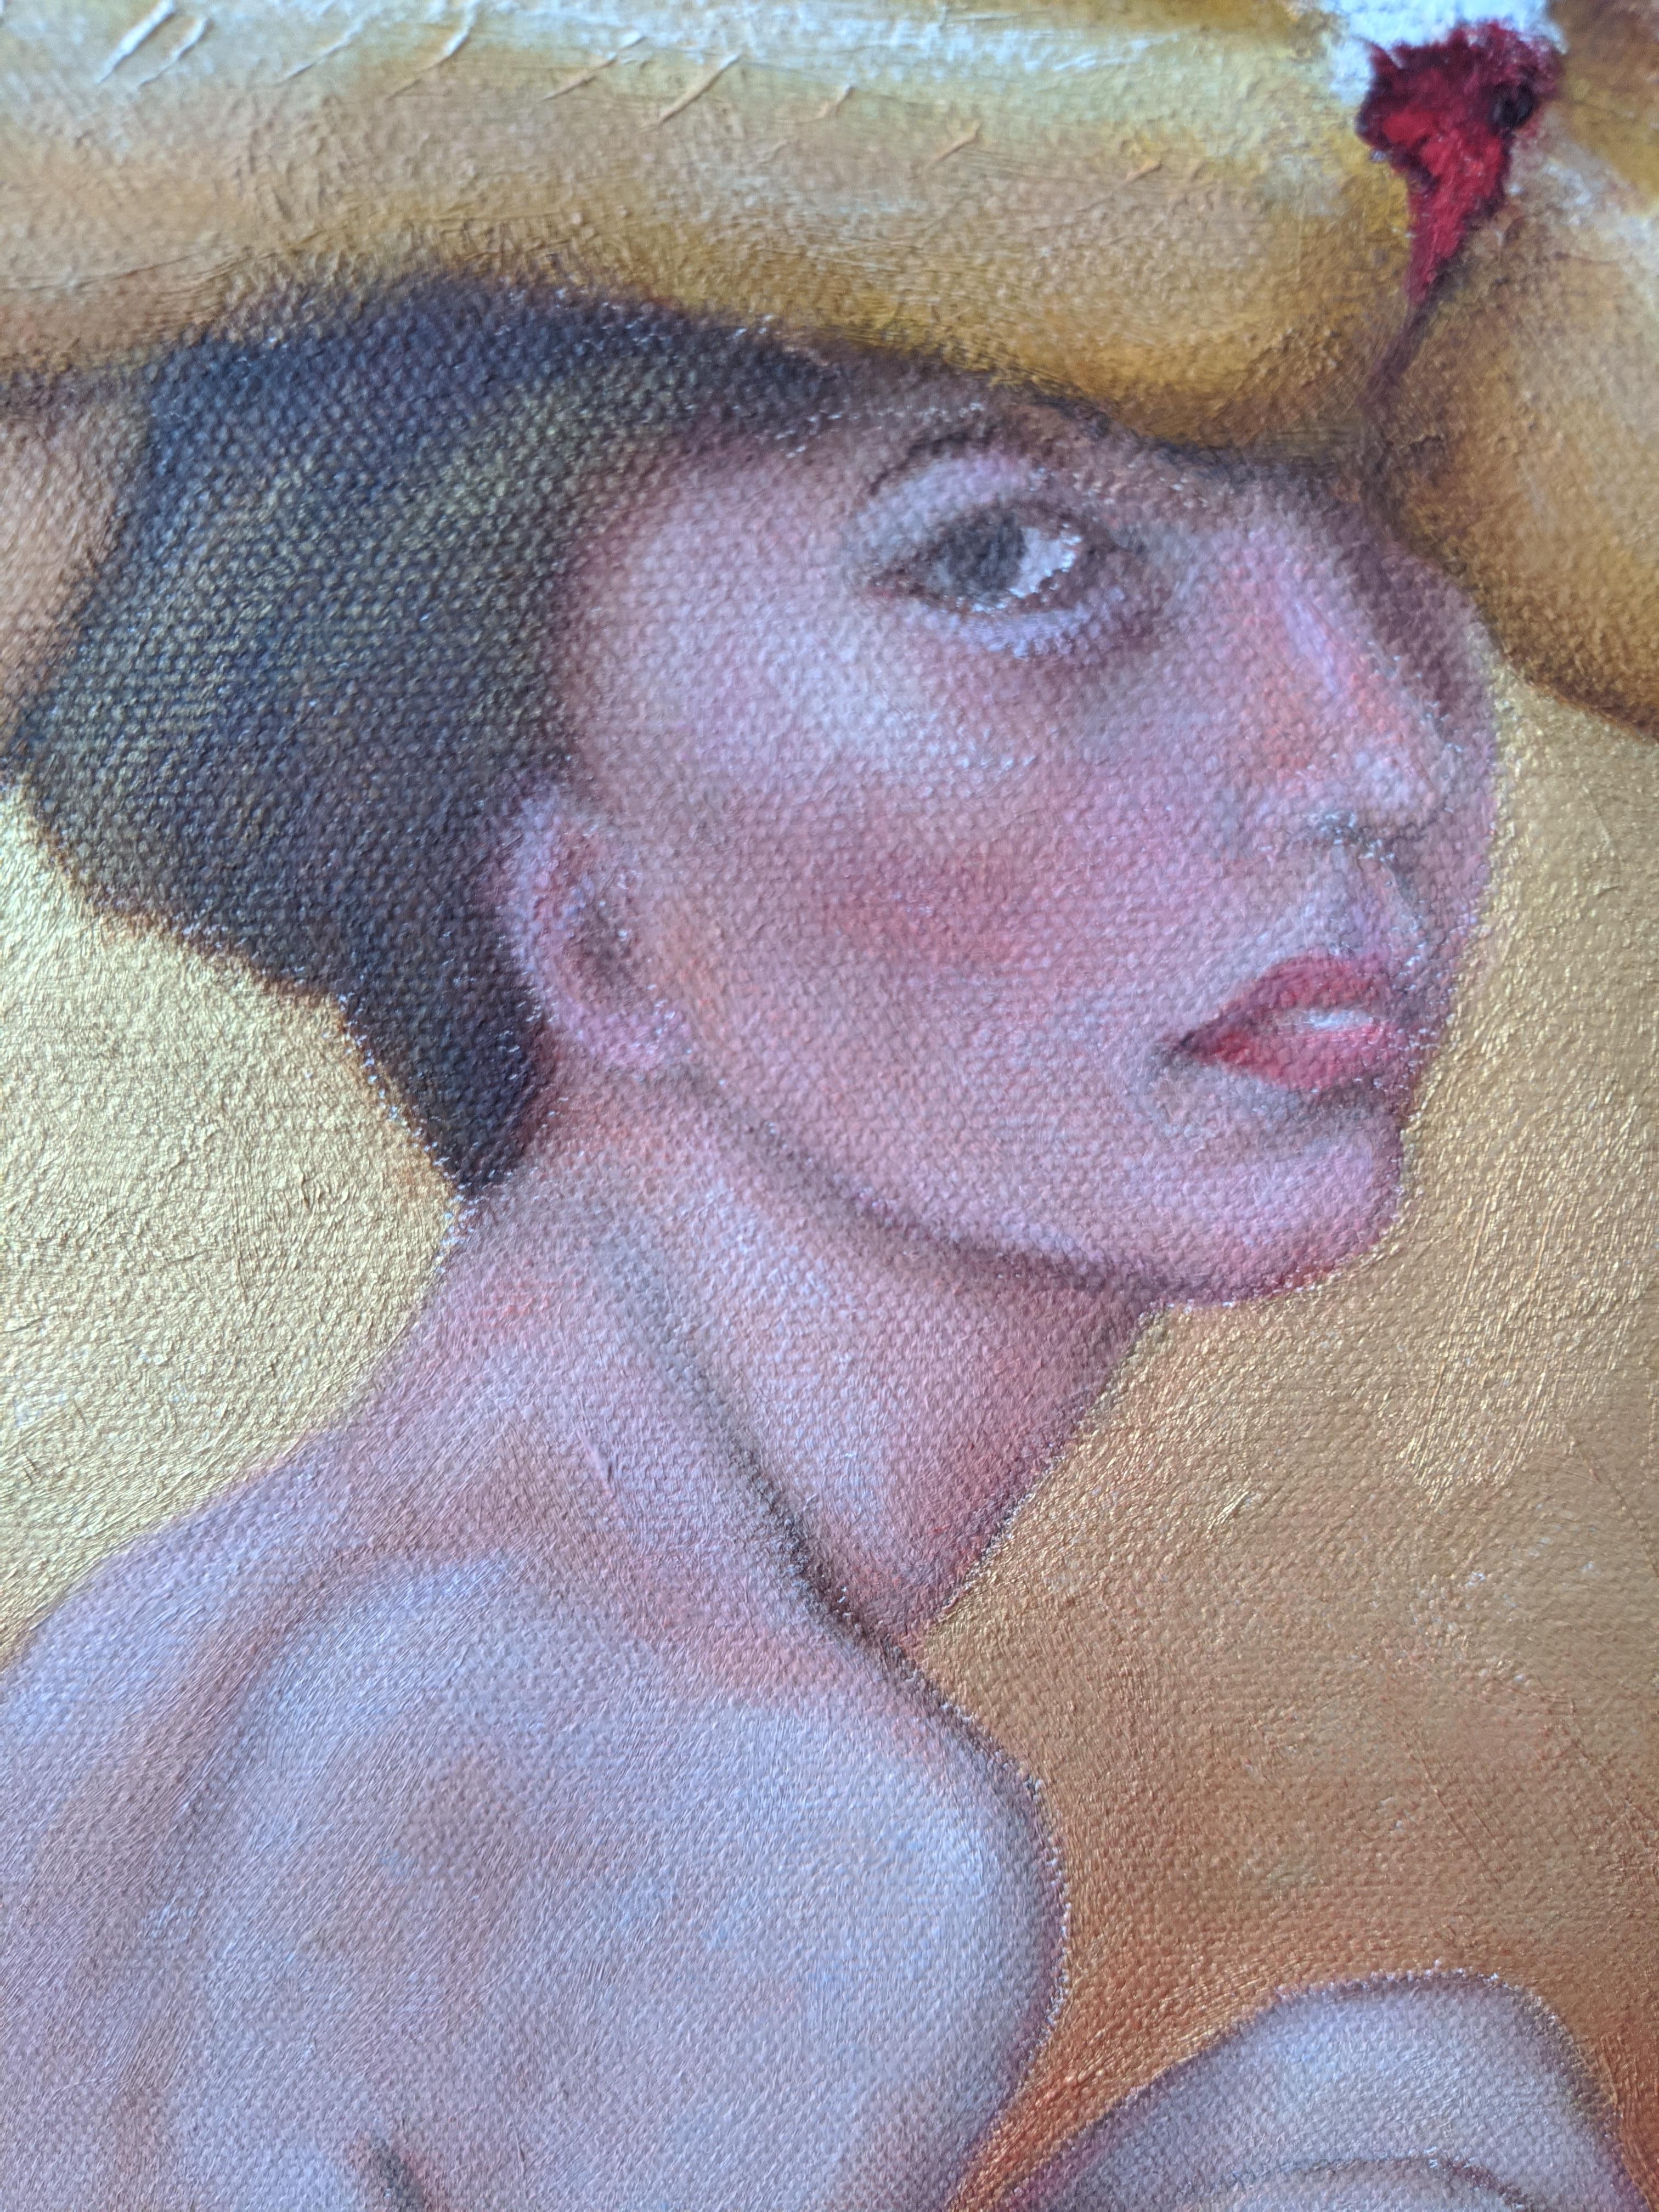 Oil on Canvas Portrait -- Balancing Life's Desires 13